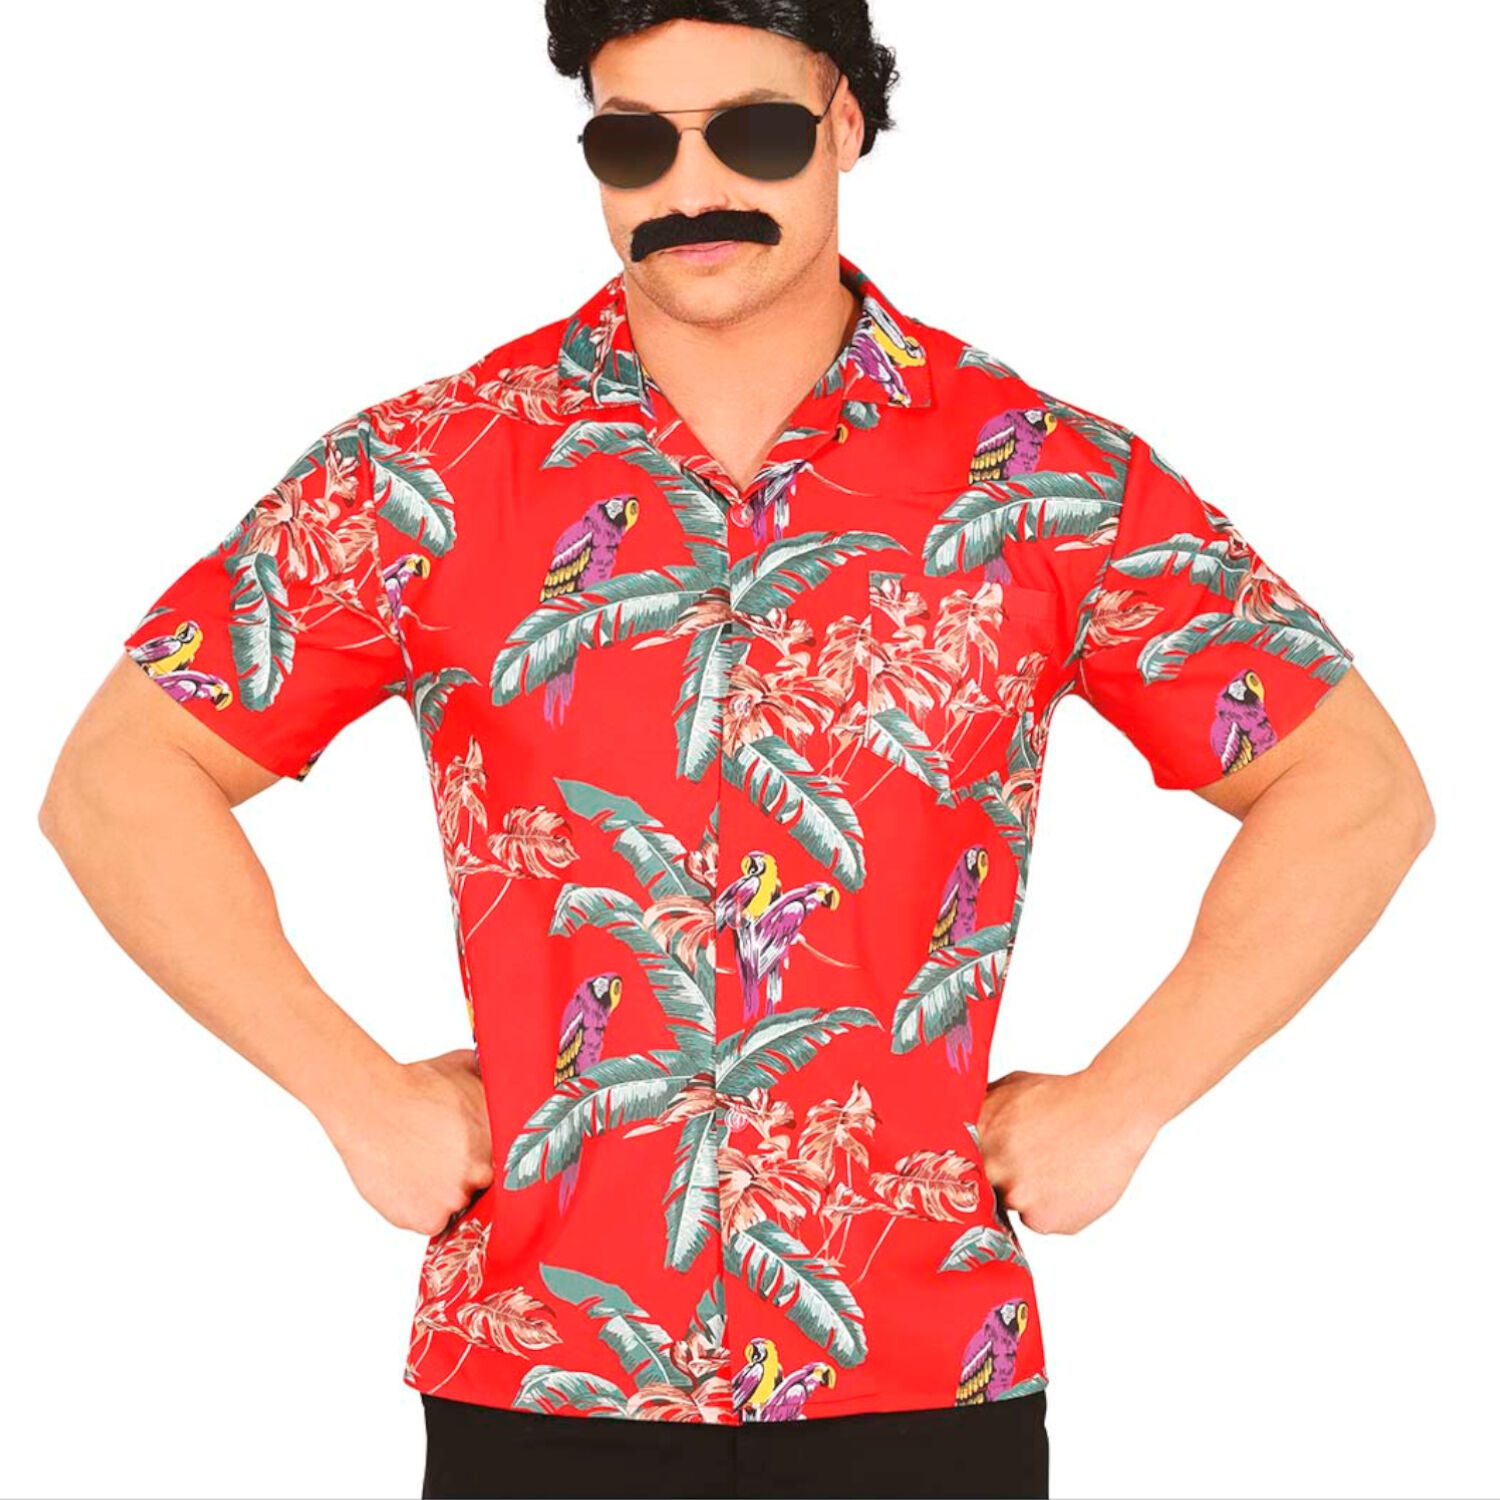 NEU Herren-Kostüm Hawaii-Hemd, rot mit Papageien, Gr. M